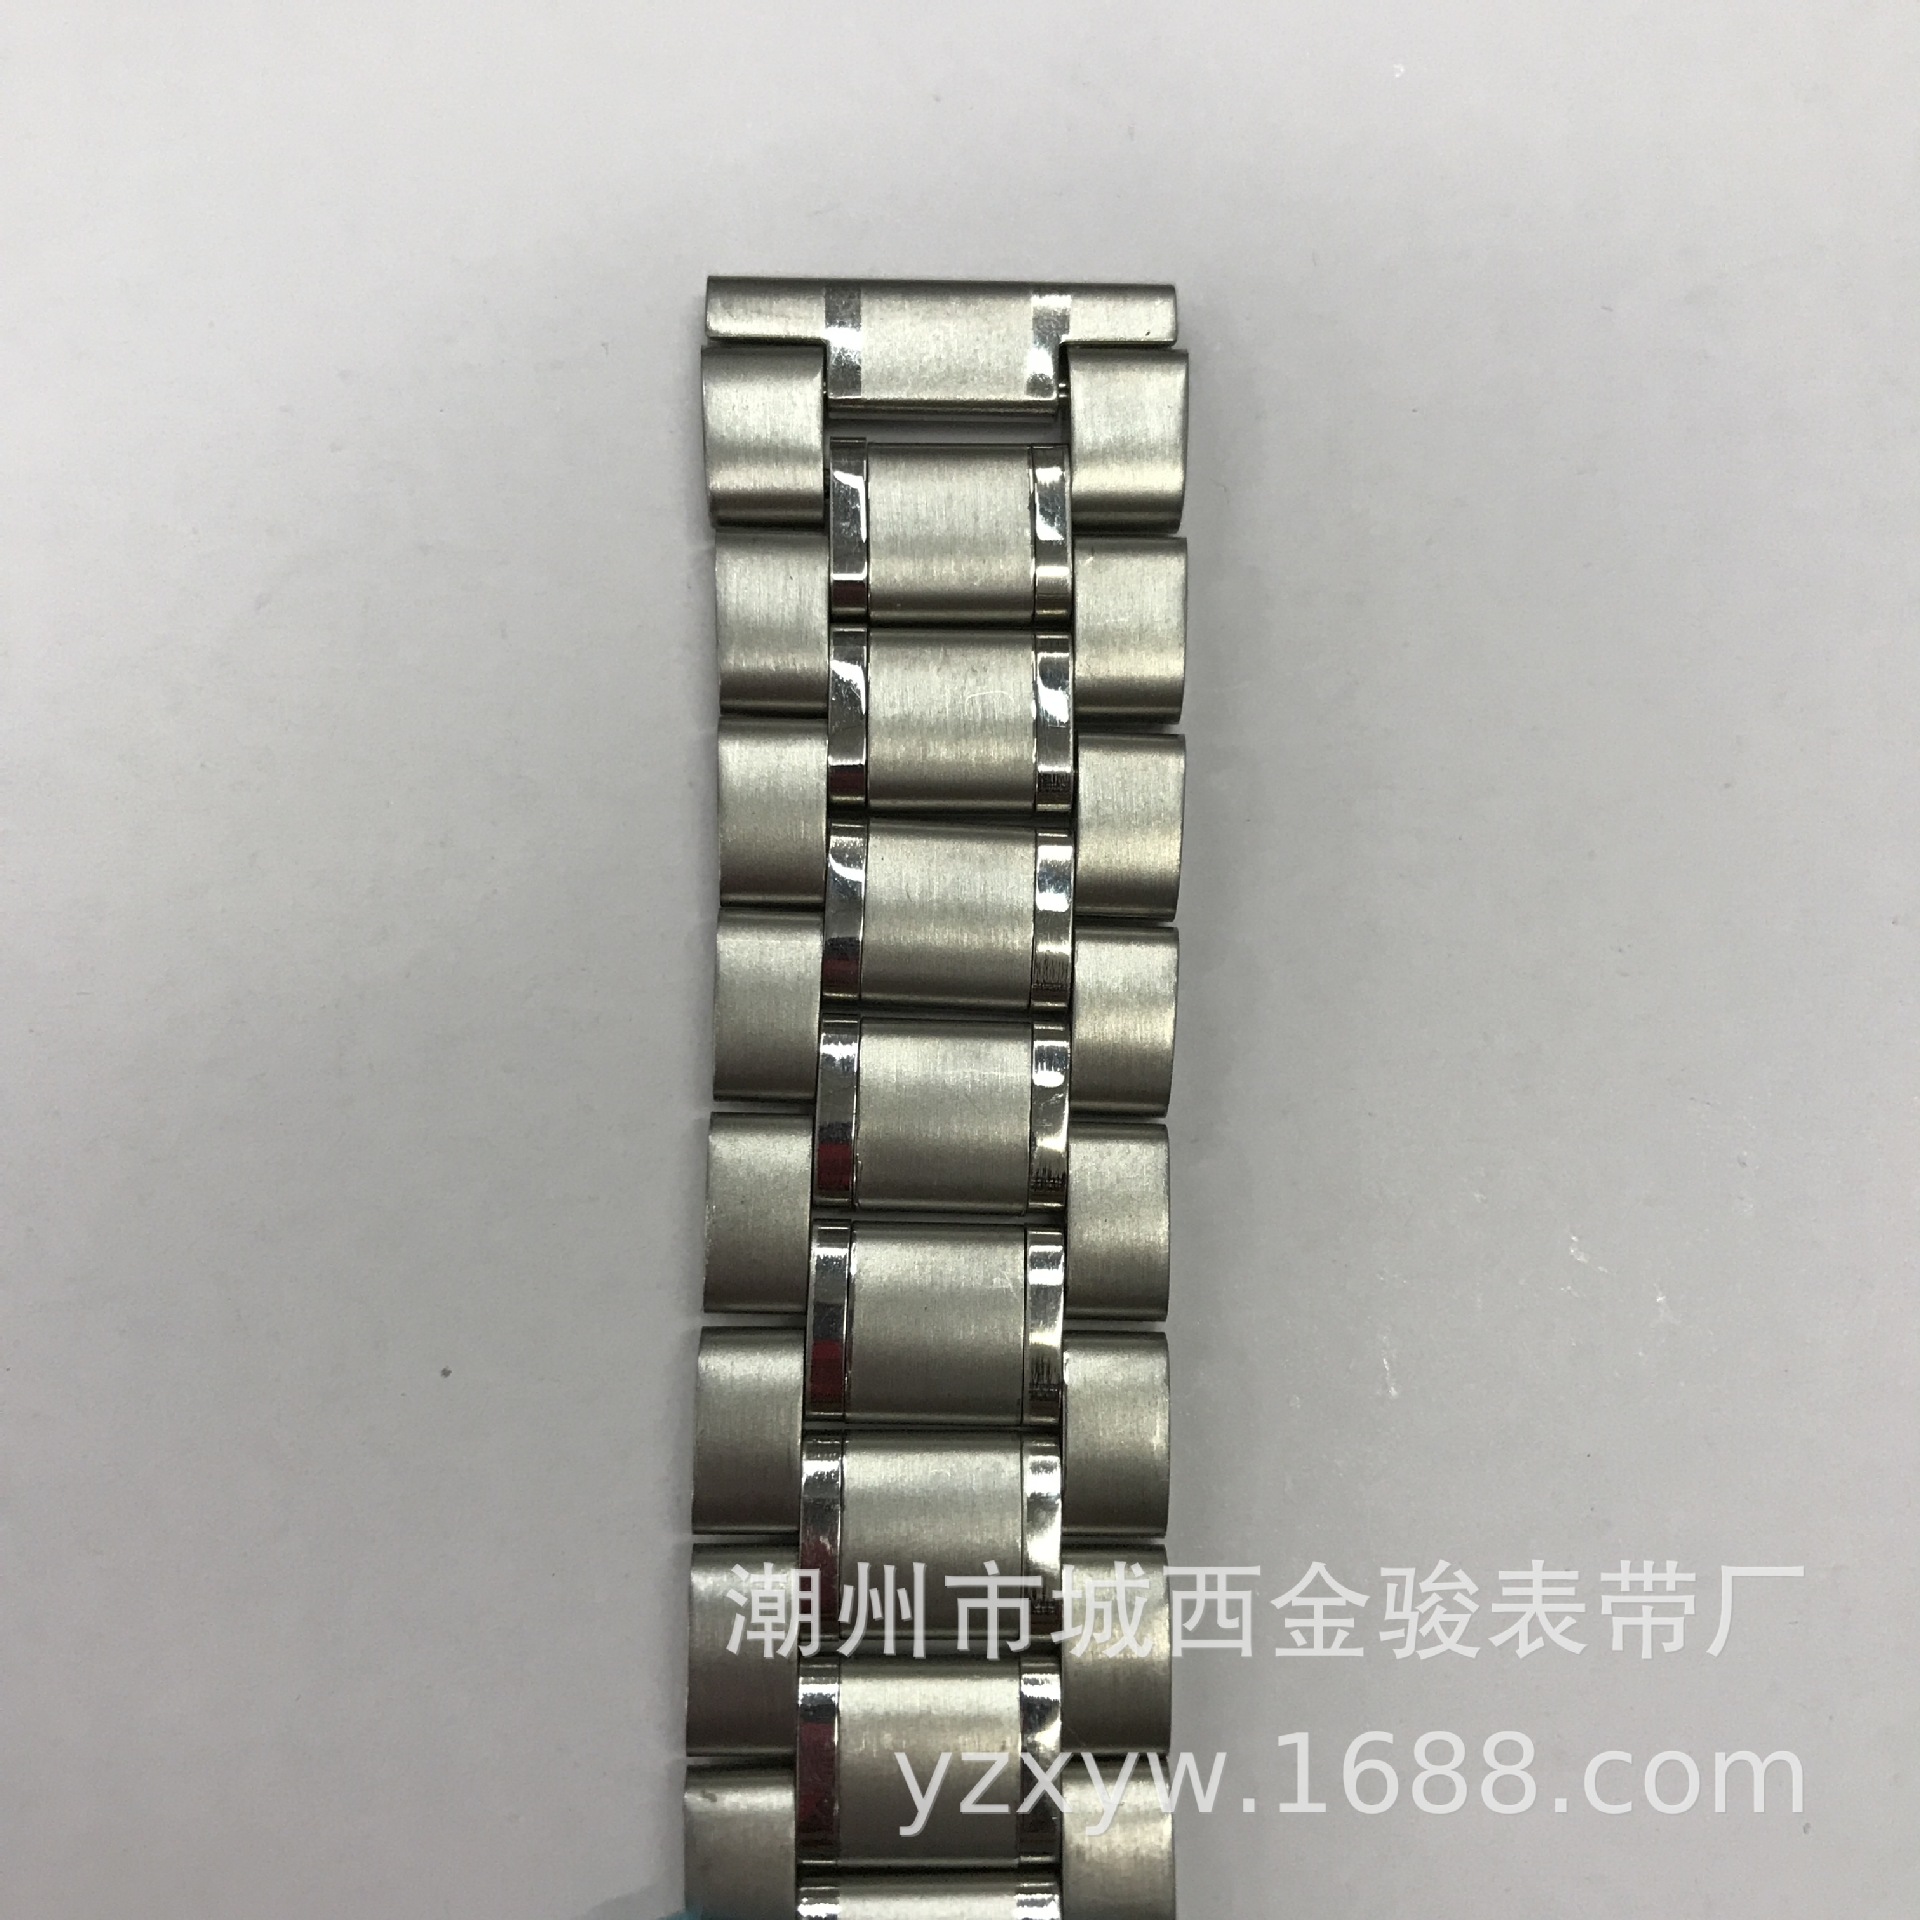 Watch Strap Steel Band Solid Core White 20mm Flat Head Men's Watch Strap in Stock